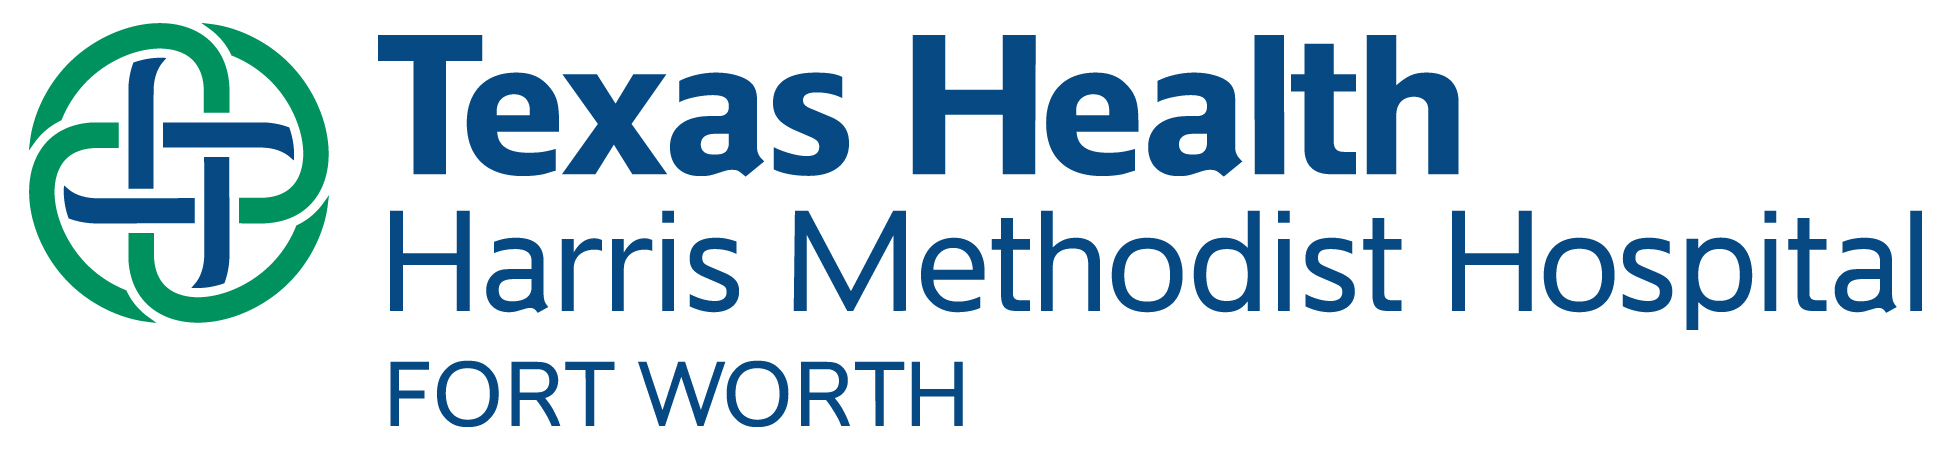 Texas_Health_Resources_Logo